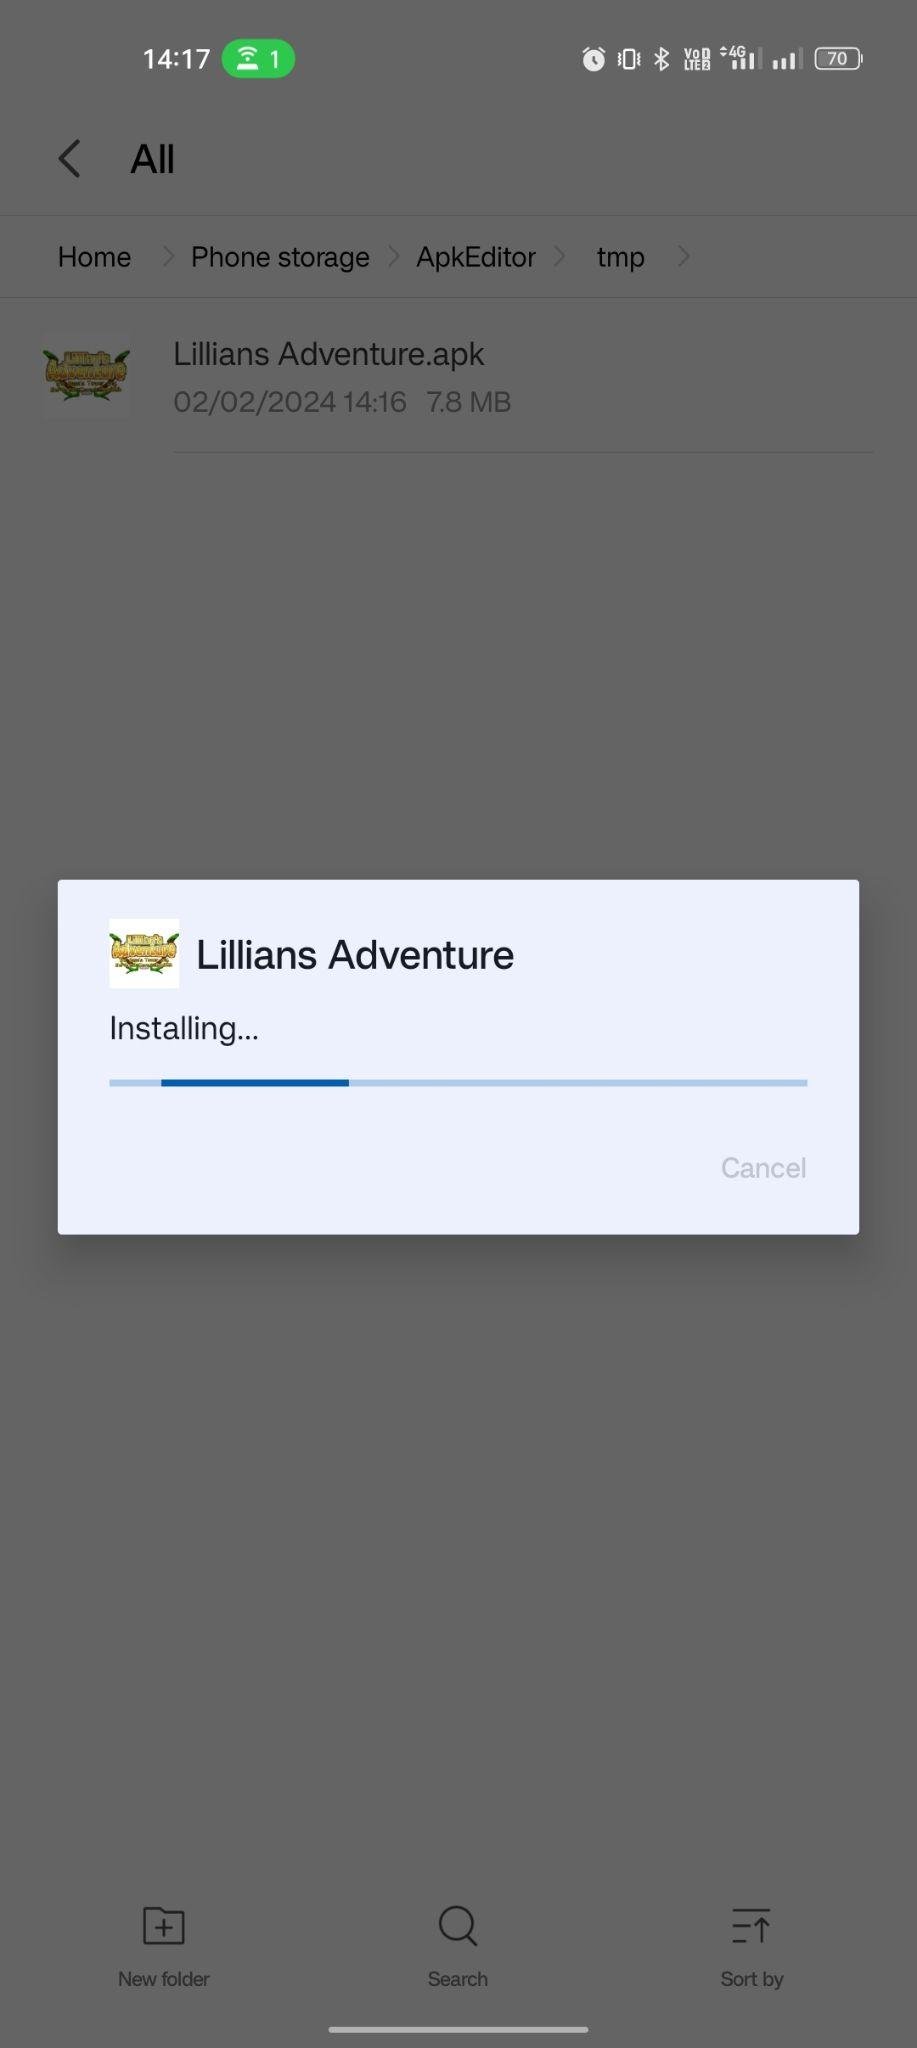 Lillian’s Adventure apk installing